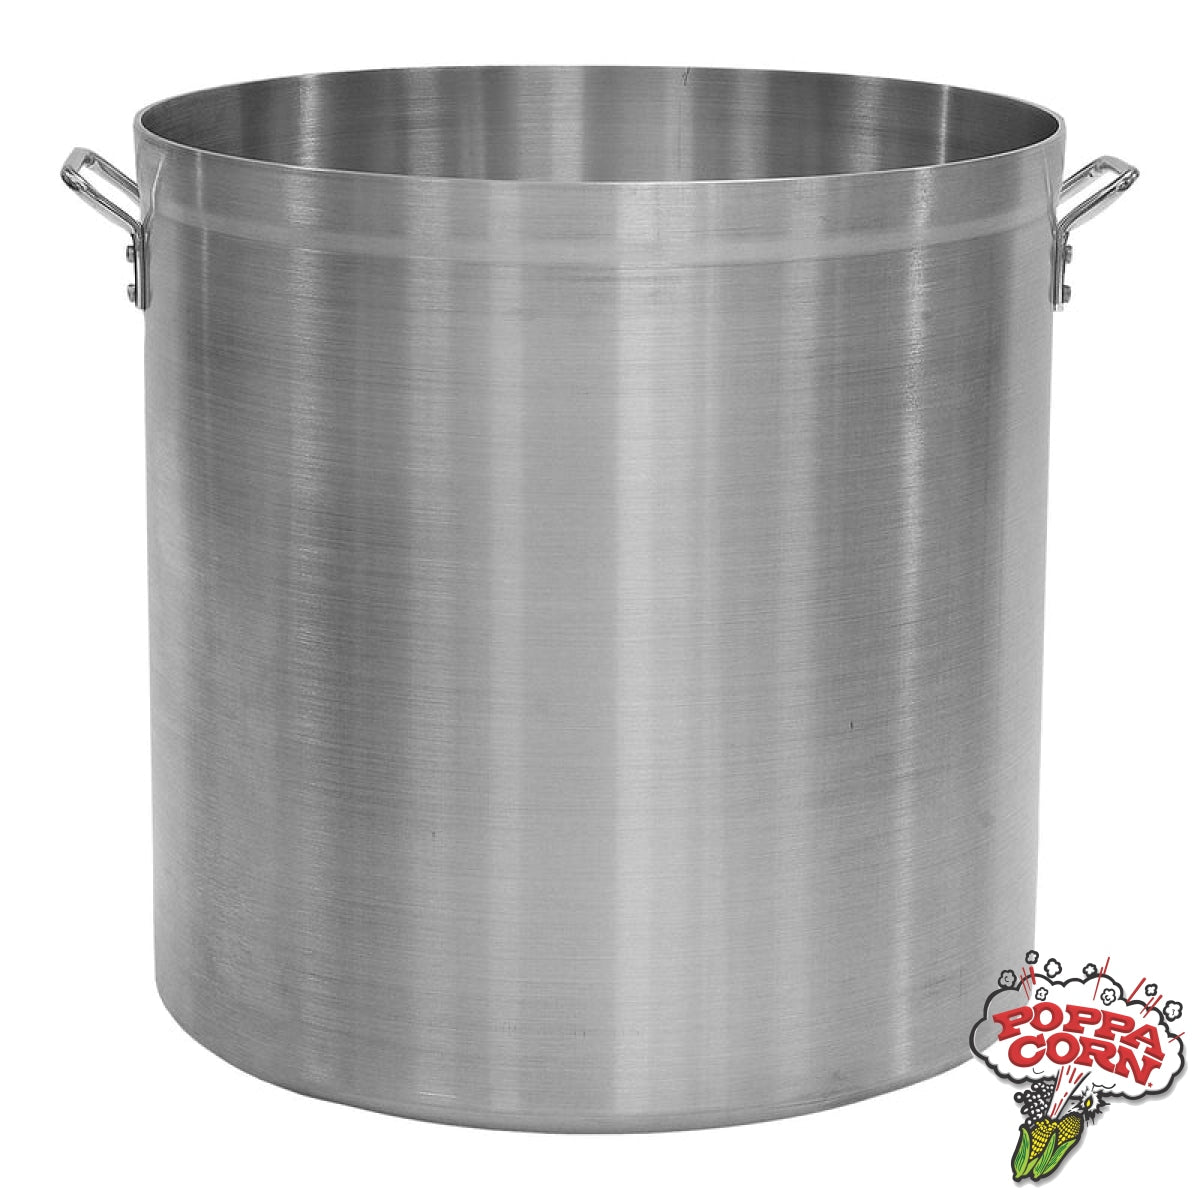 Mixing Accessory Bowl - 6 gallon - GM2707M - Poppa Corn Corp